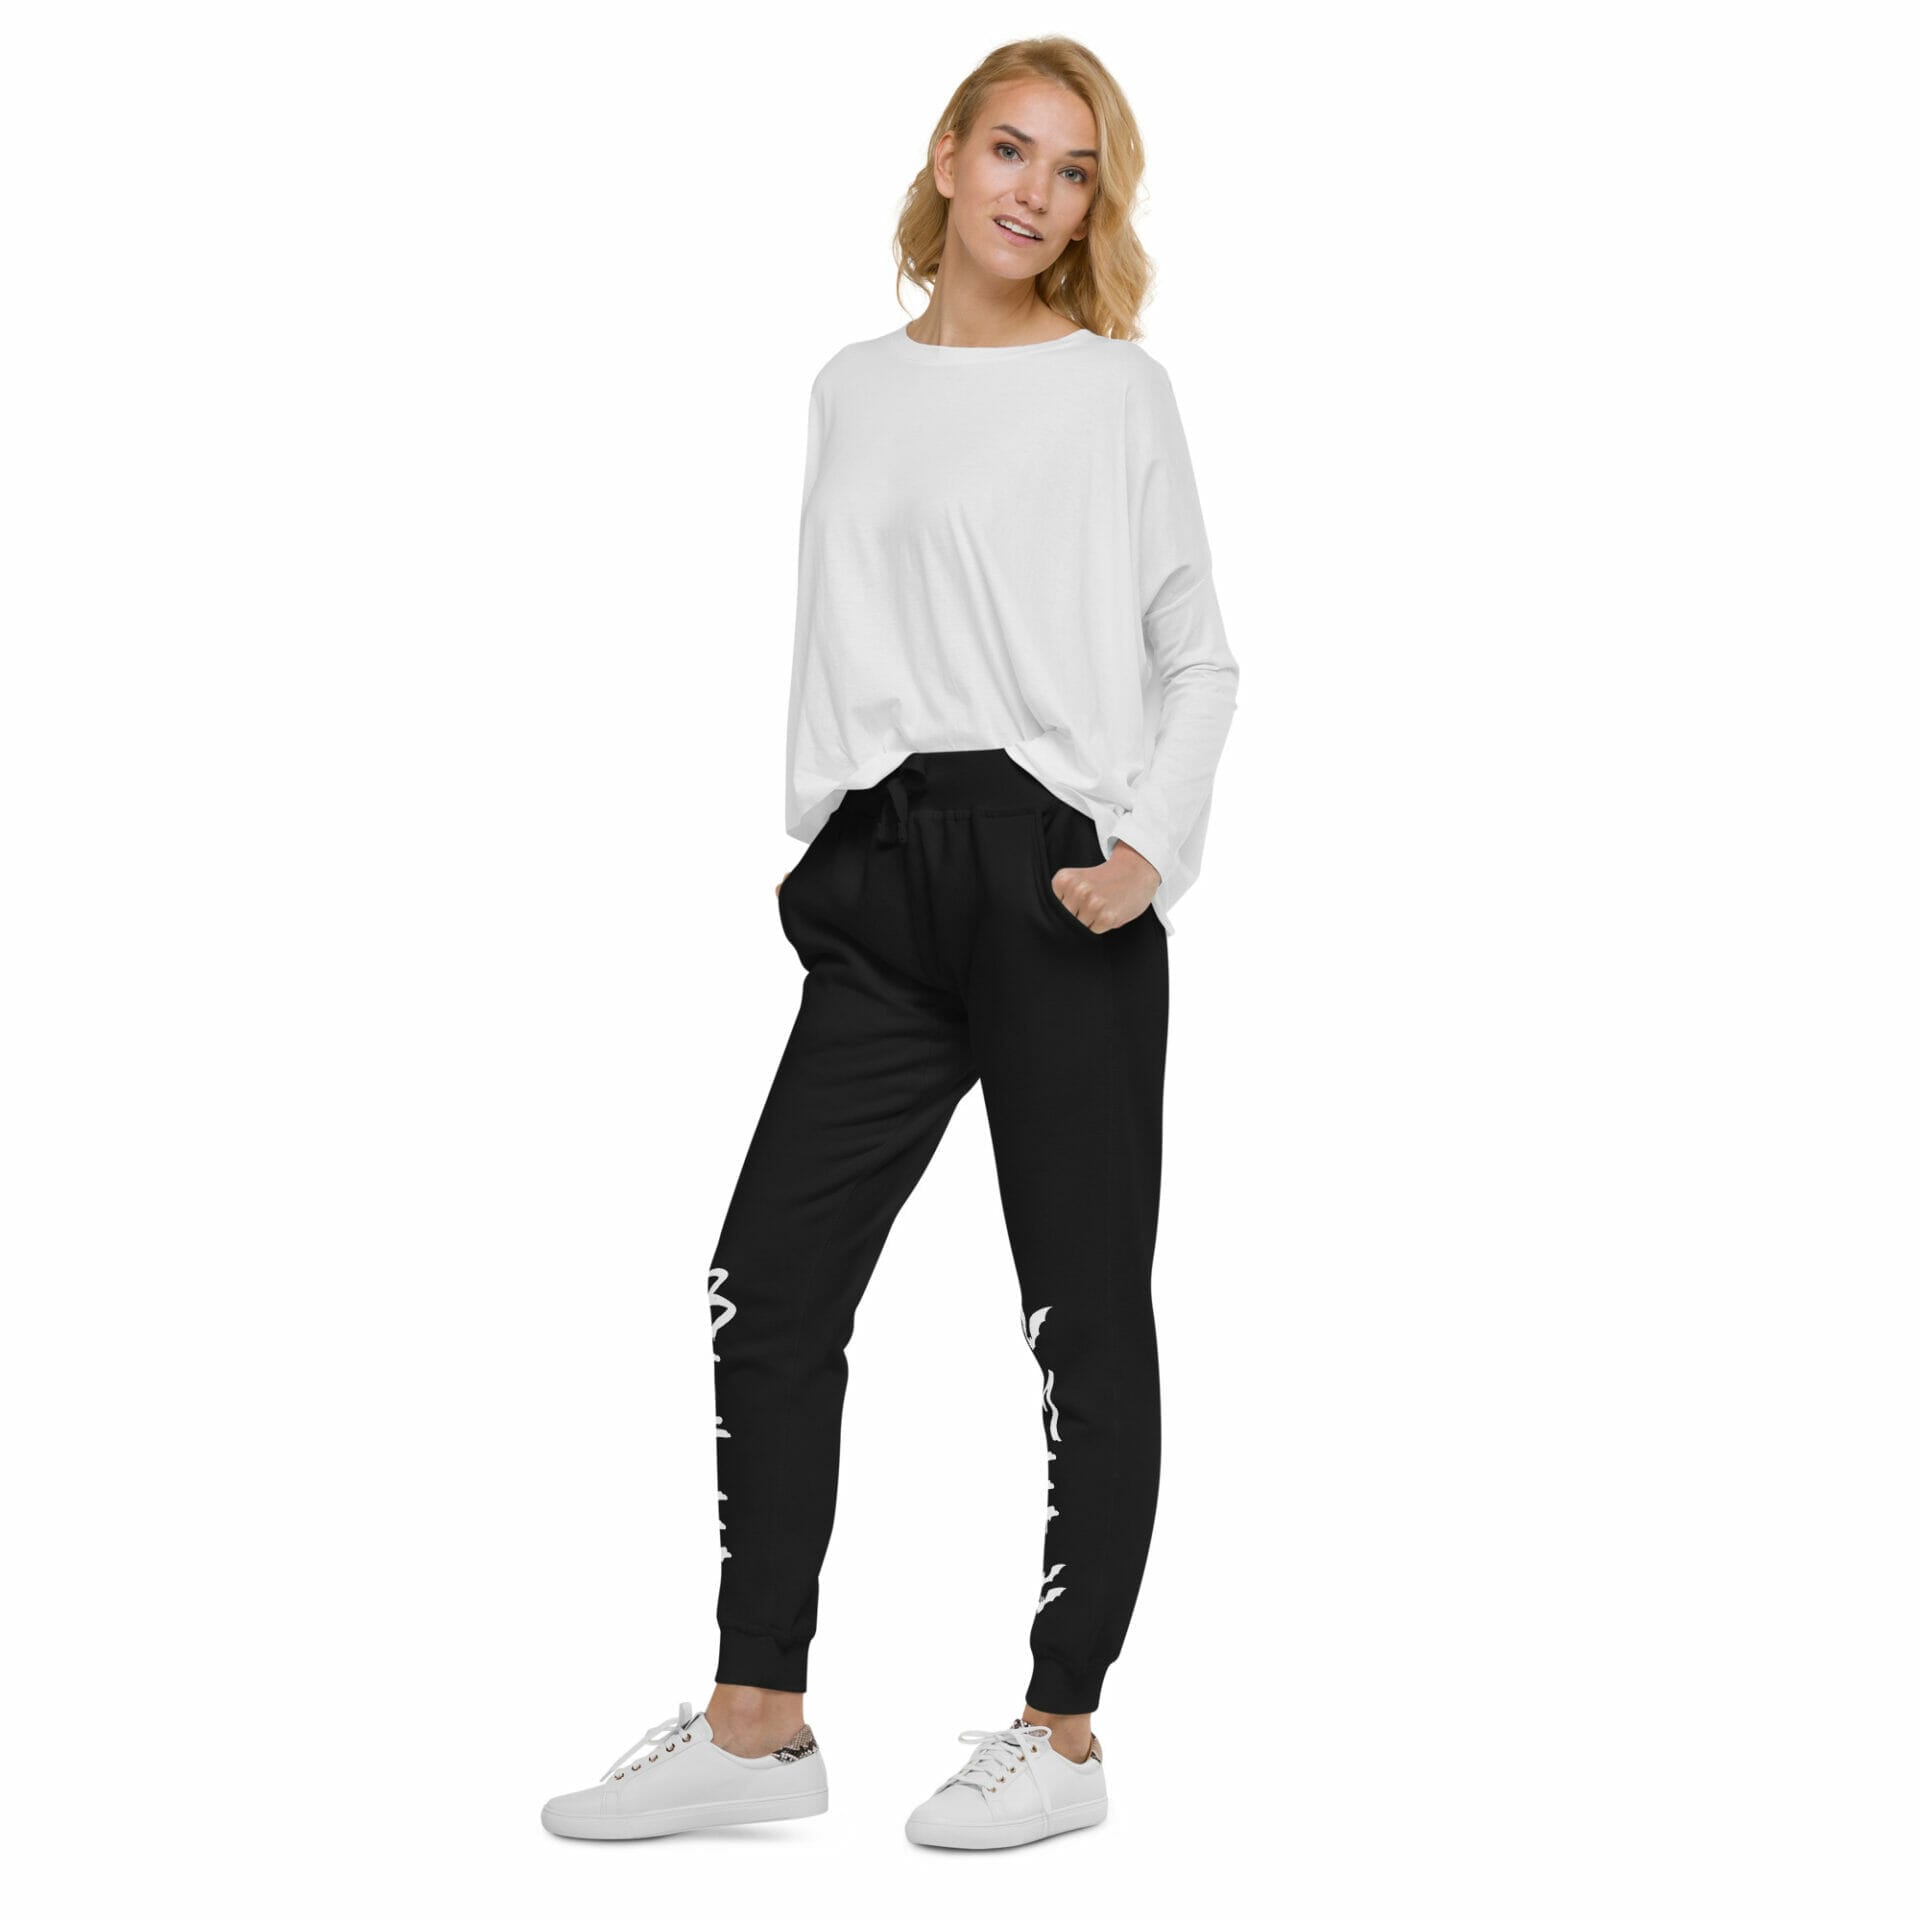 unisex-fleece-sweatpants-black-left-front-6495cd37e62bb.jpg